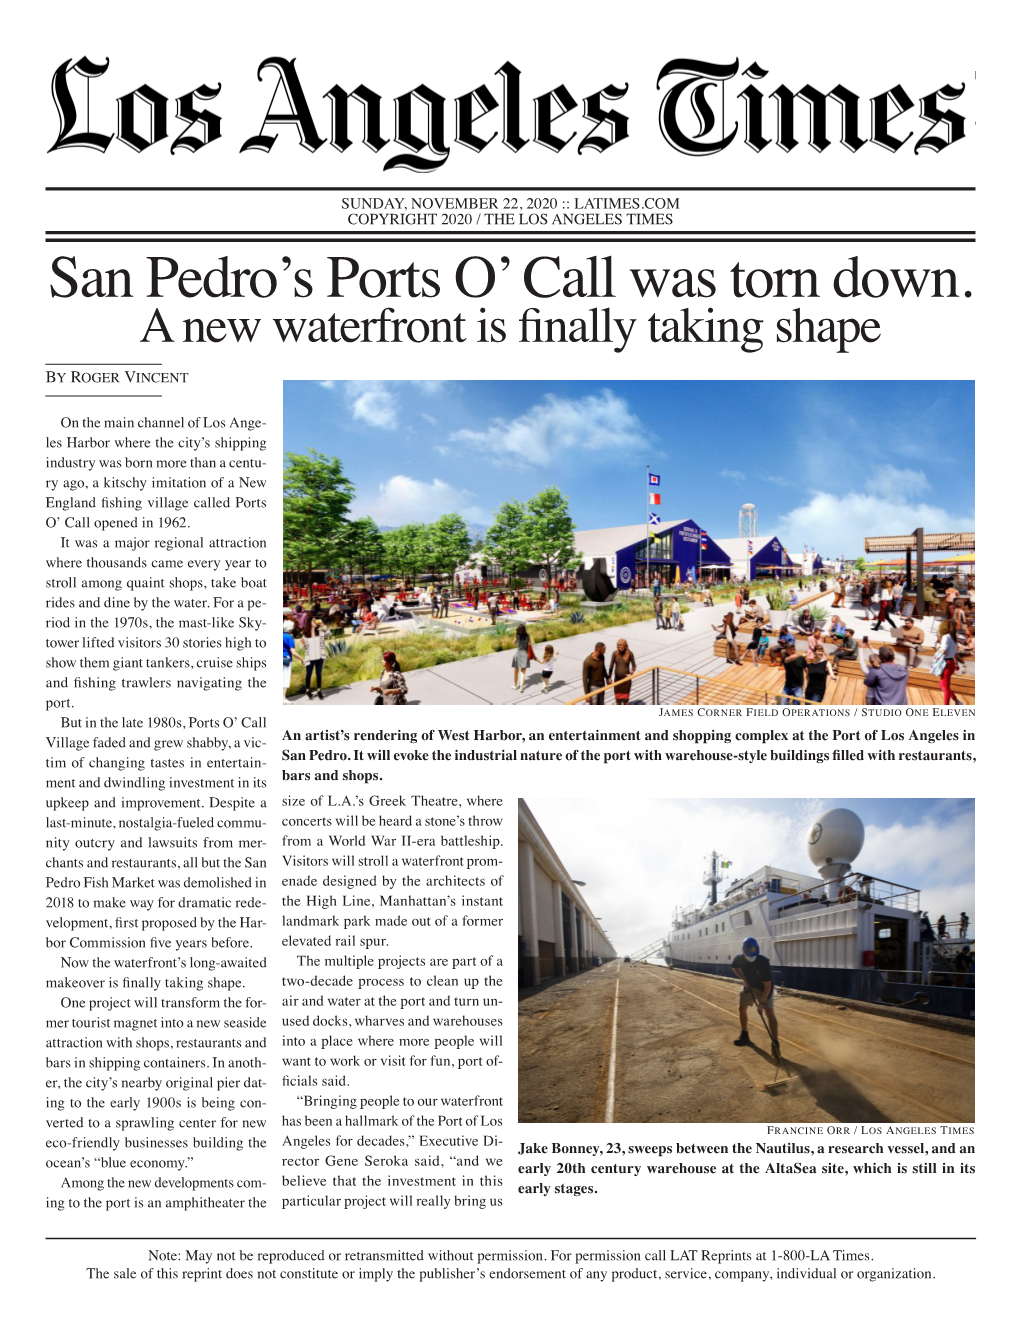 San Pedro's Ports O' Call Was Torn Down